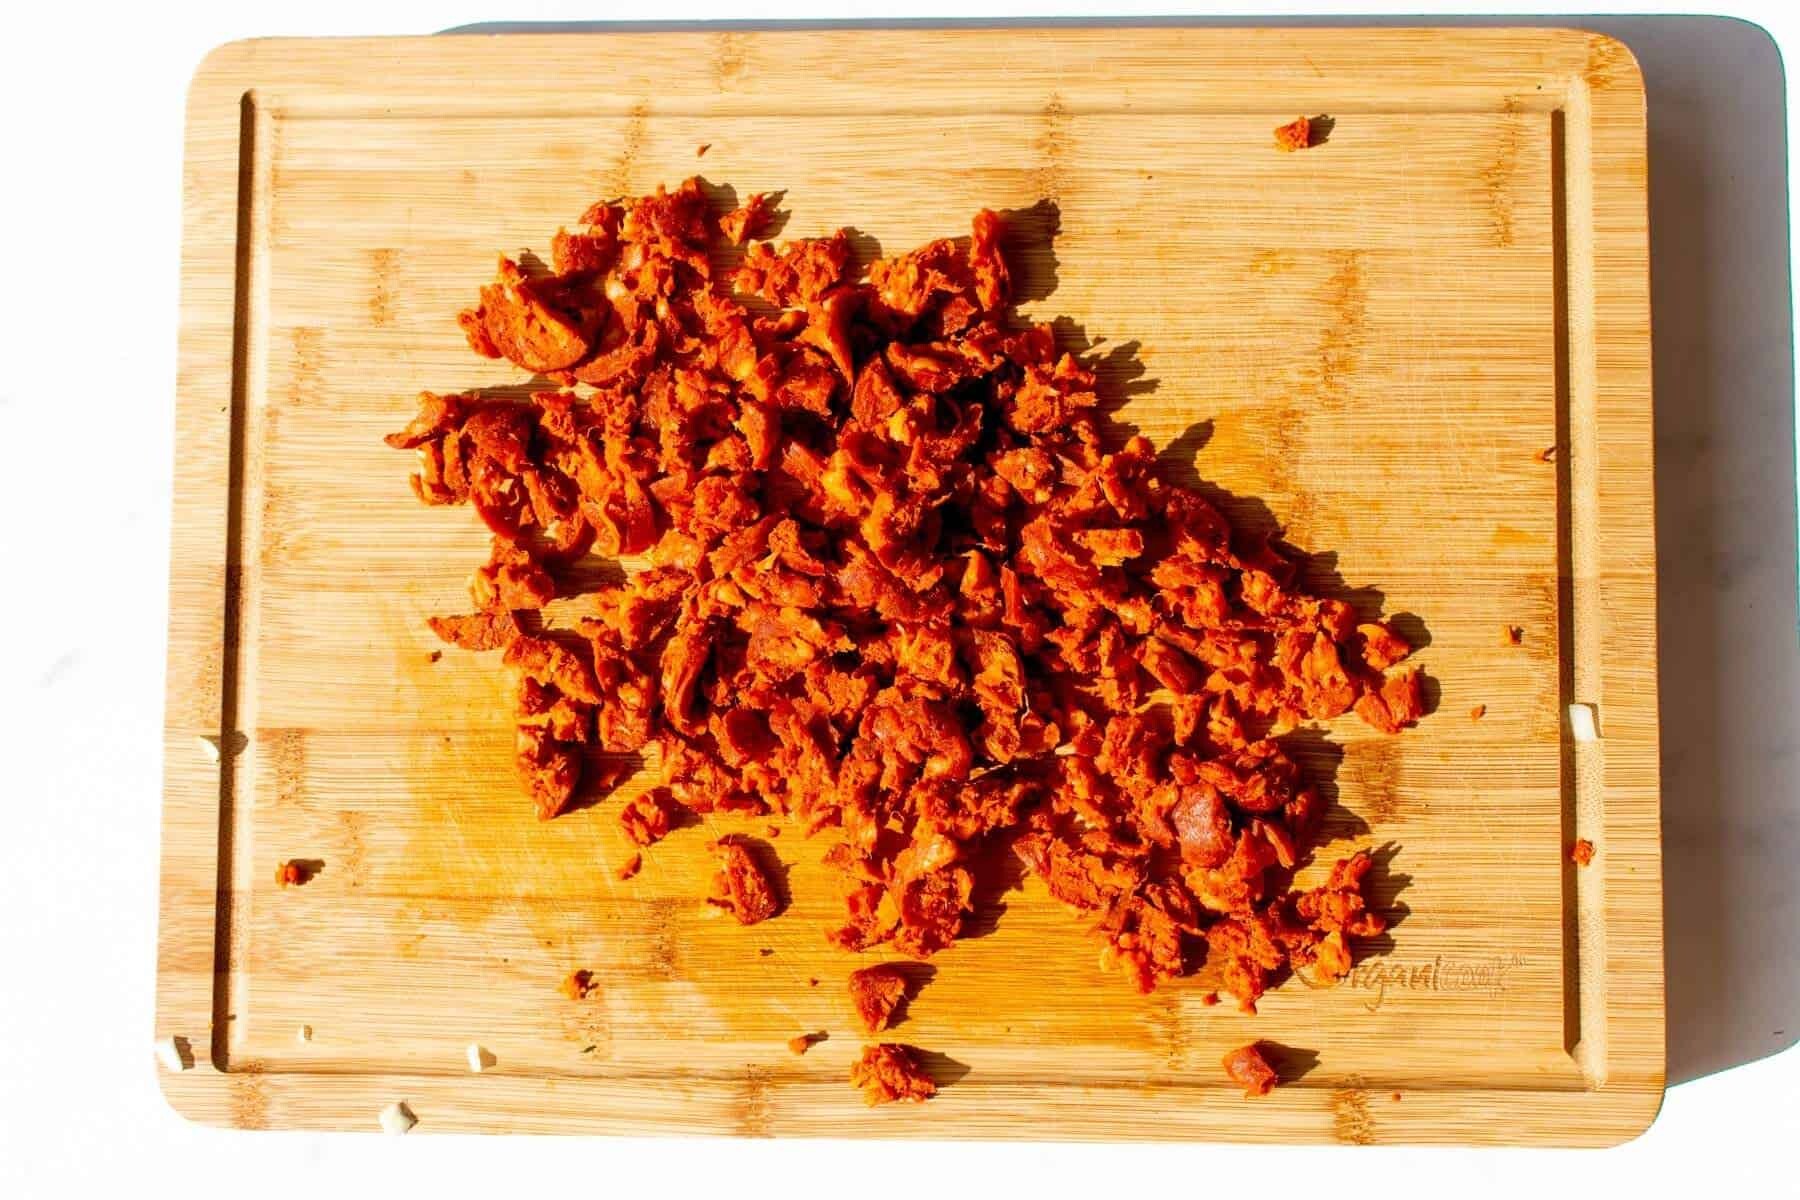 Chorizo finely chopped on a wooden chopping board.